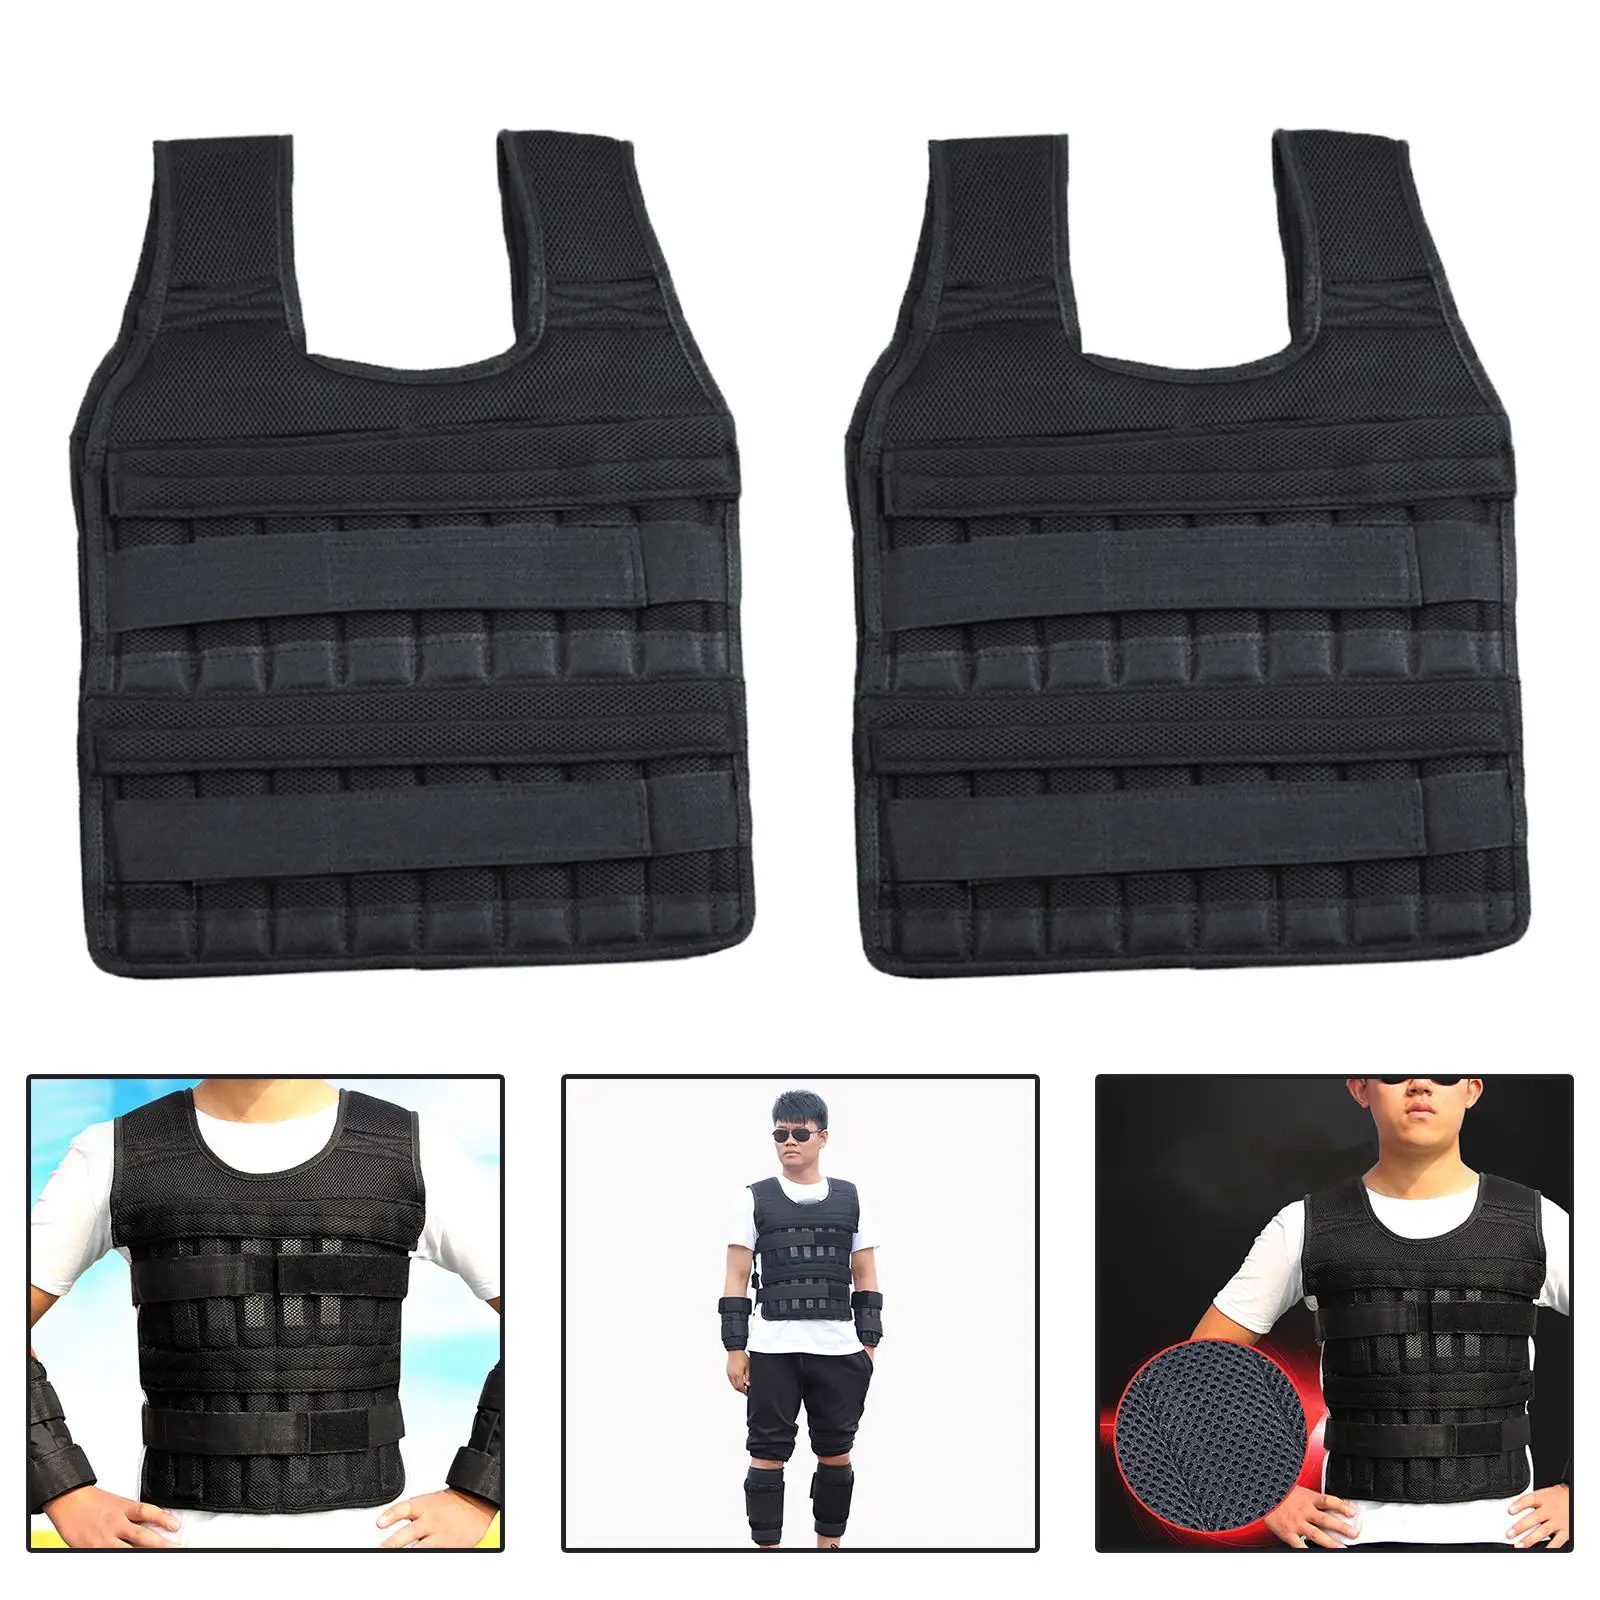 Weight Vest Waistcoat Breathable Clothing Adjustable Jacket for Strength Training Cardio Jogging Workout Men Unisex